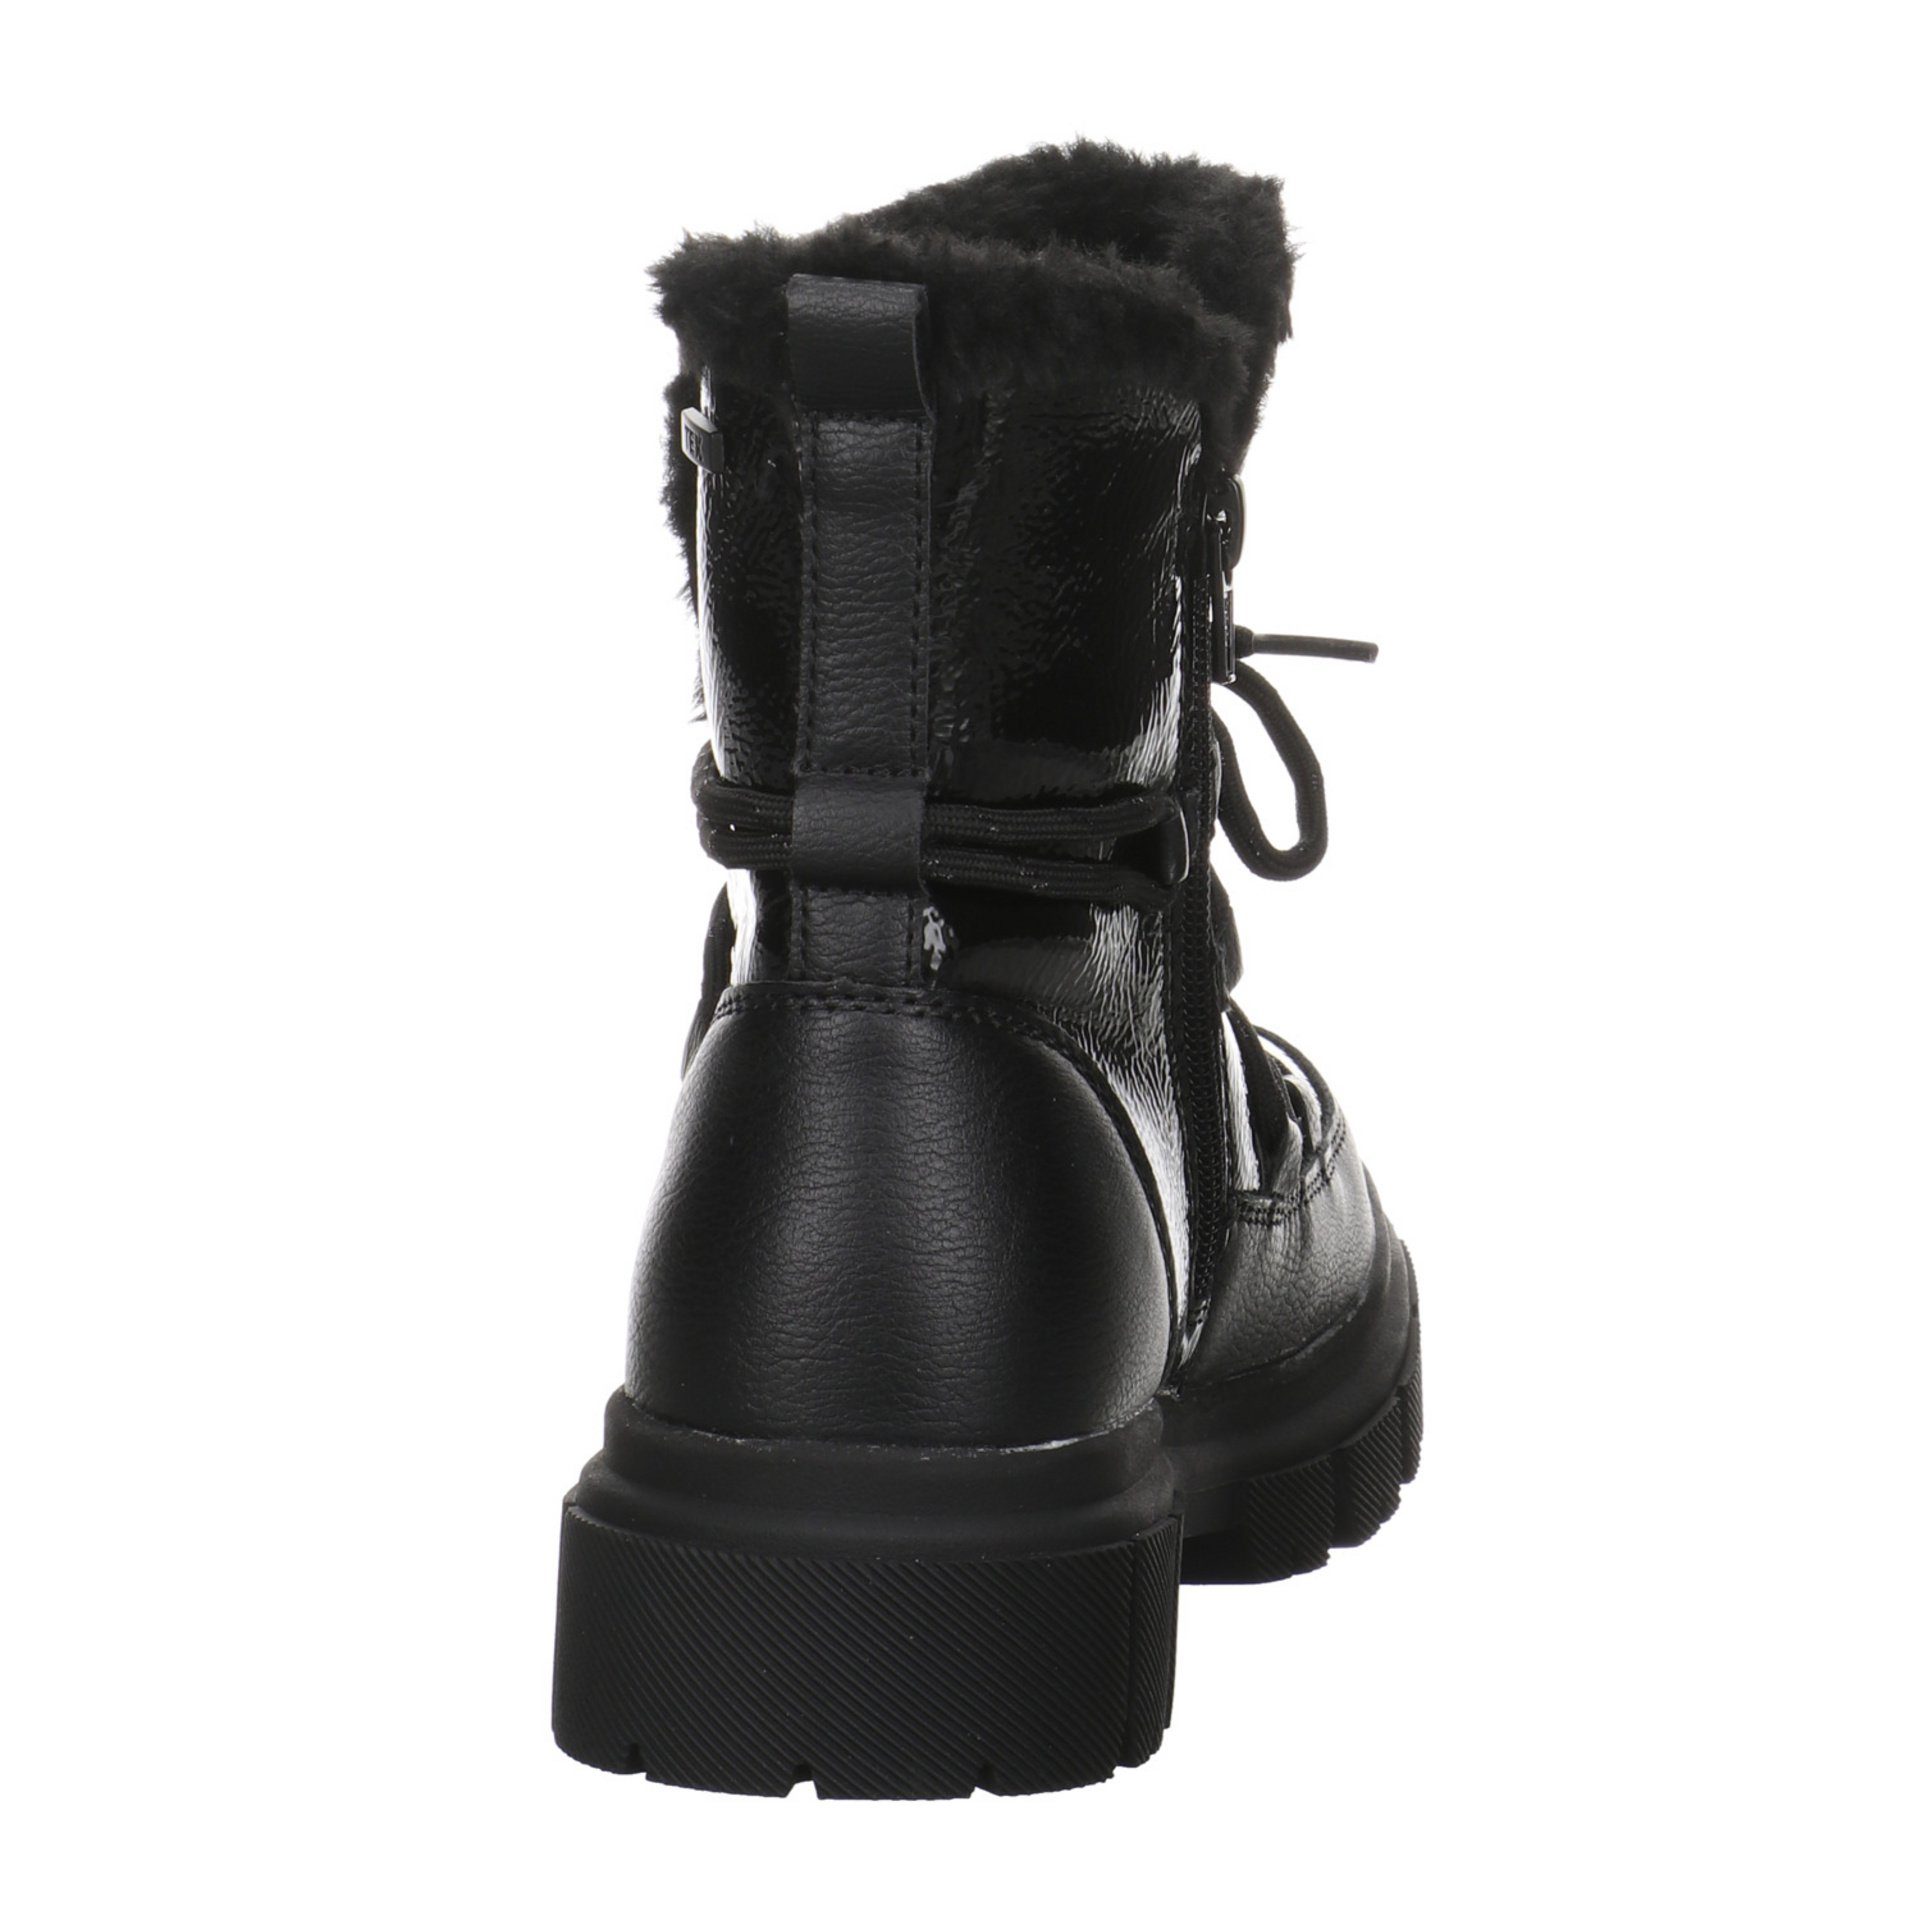 Boots Stiefel Mädchen TAILOR Schuhe black Stiefelette TOM Synthetikkombination Kinderschuhe